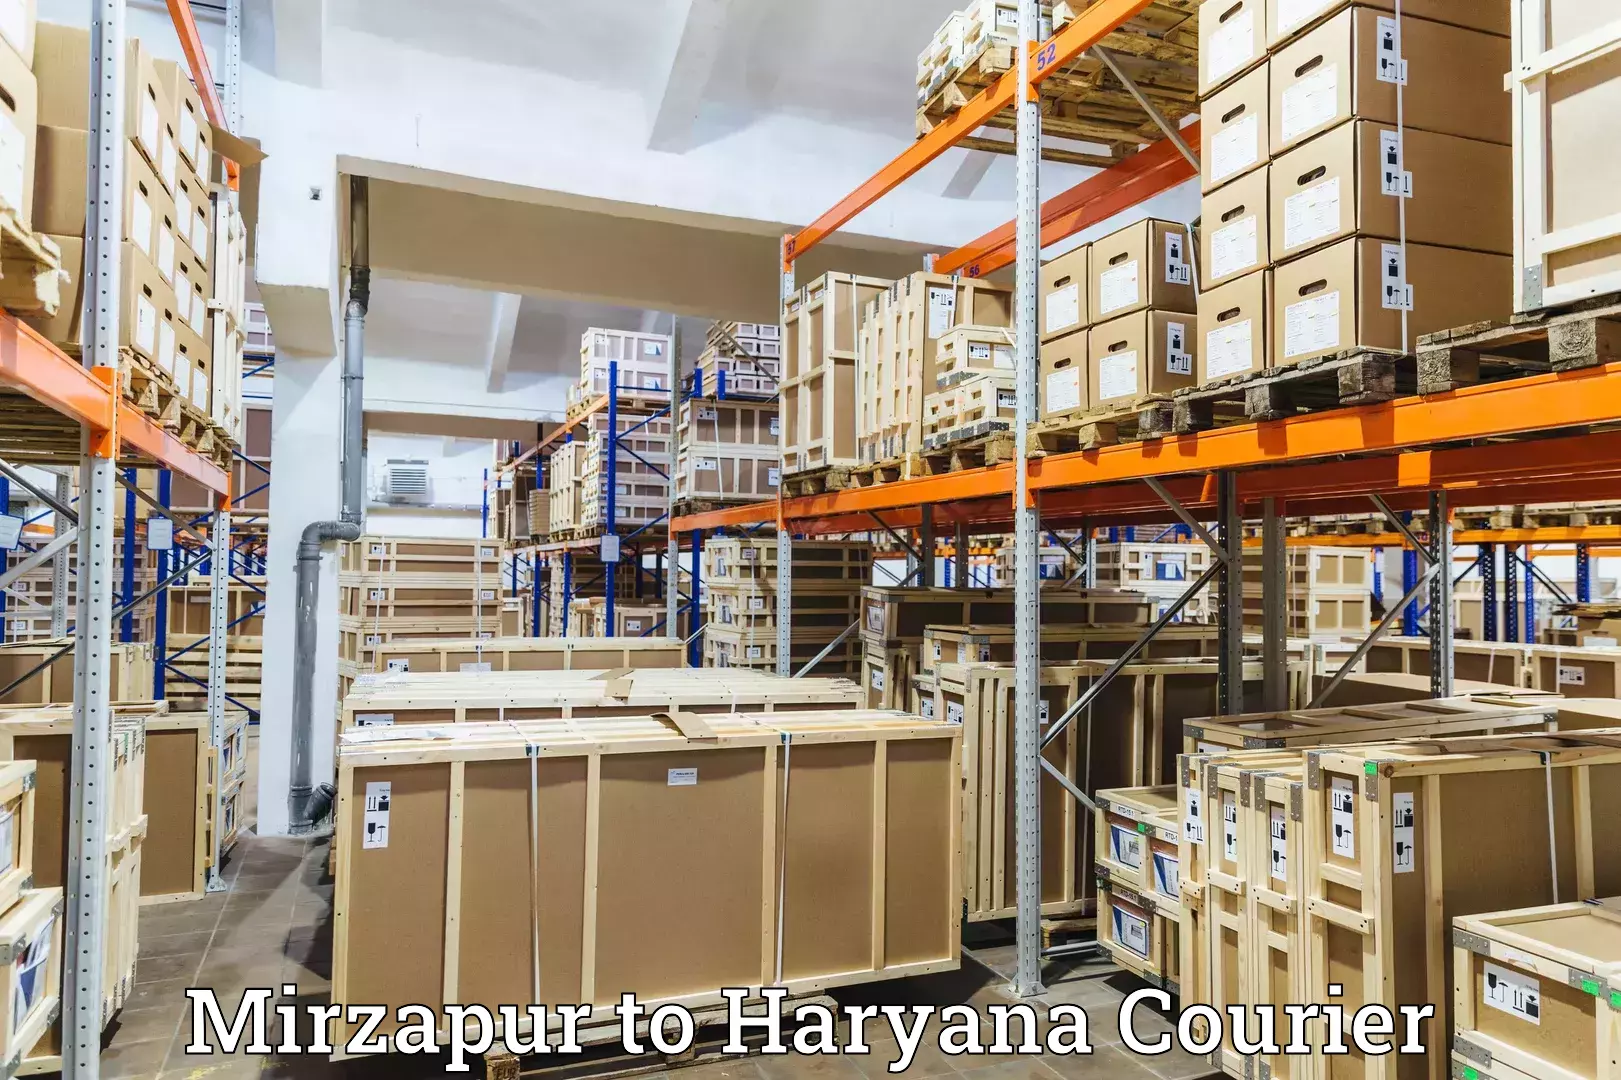 Courier service innovation Mirzapur to Rewari